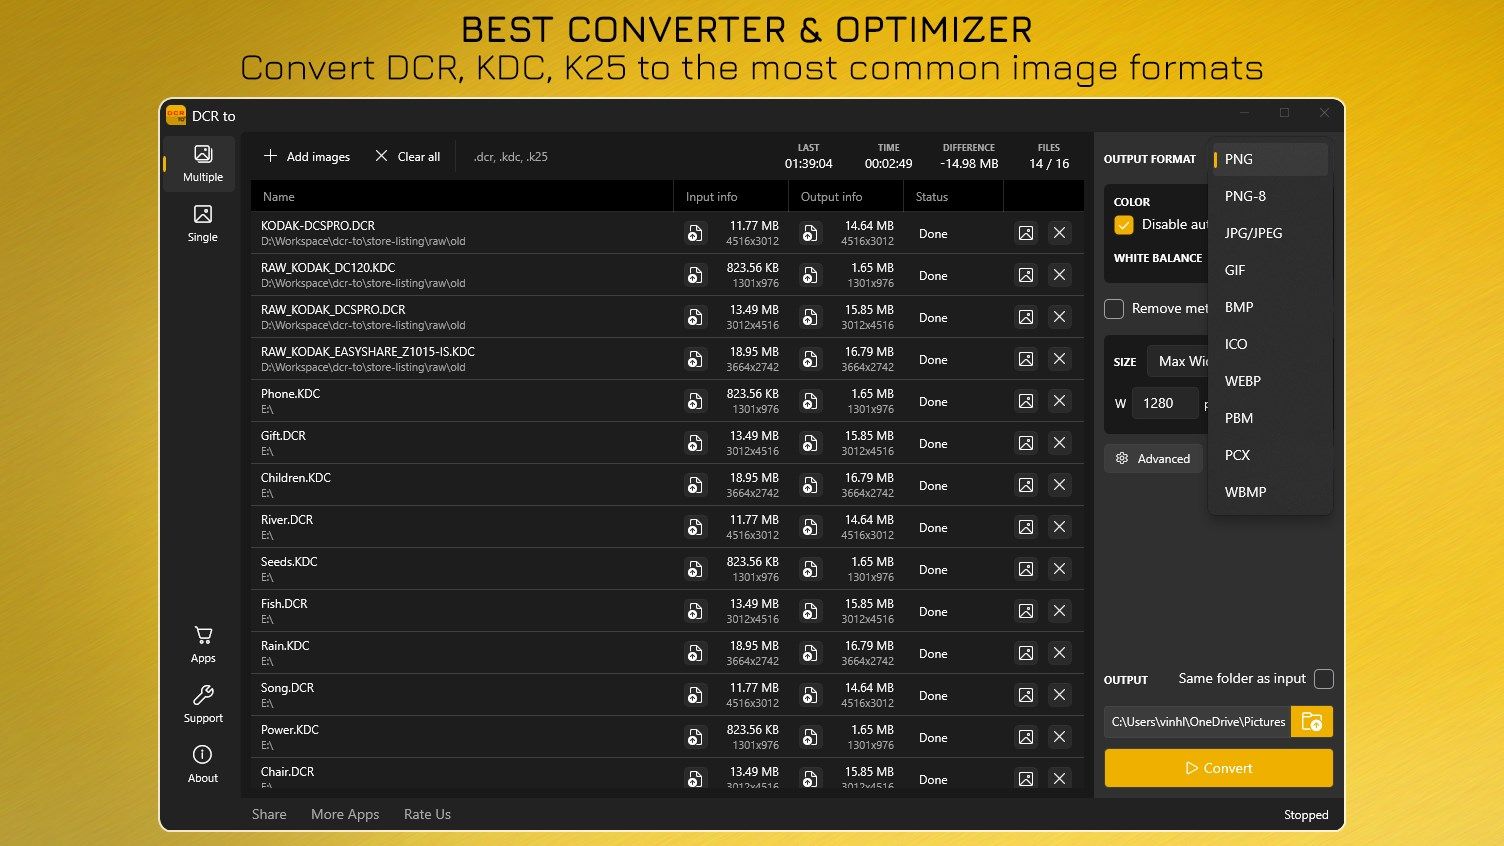 DCR to - DCR, KDC, K25 Image Converter